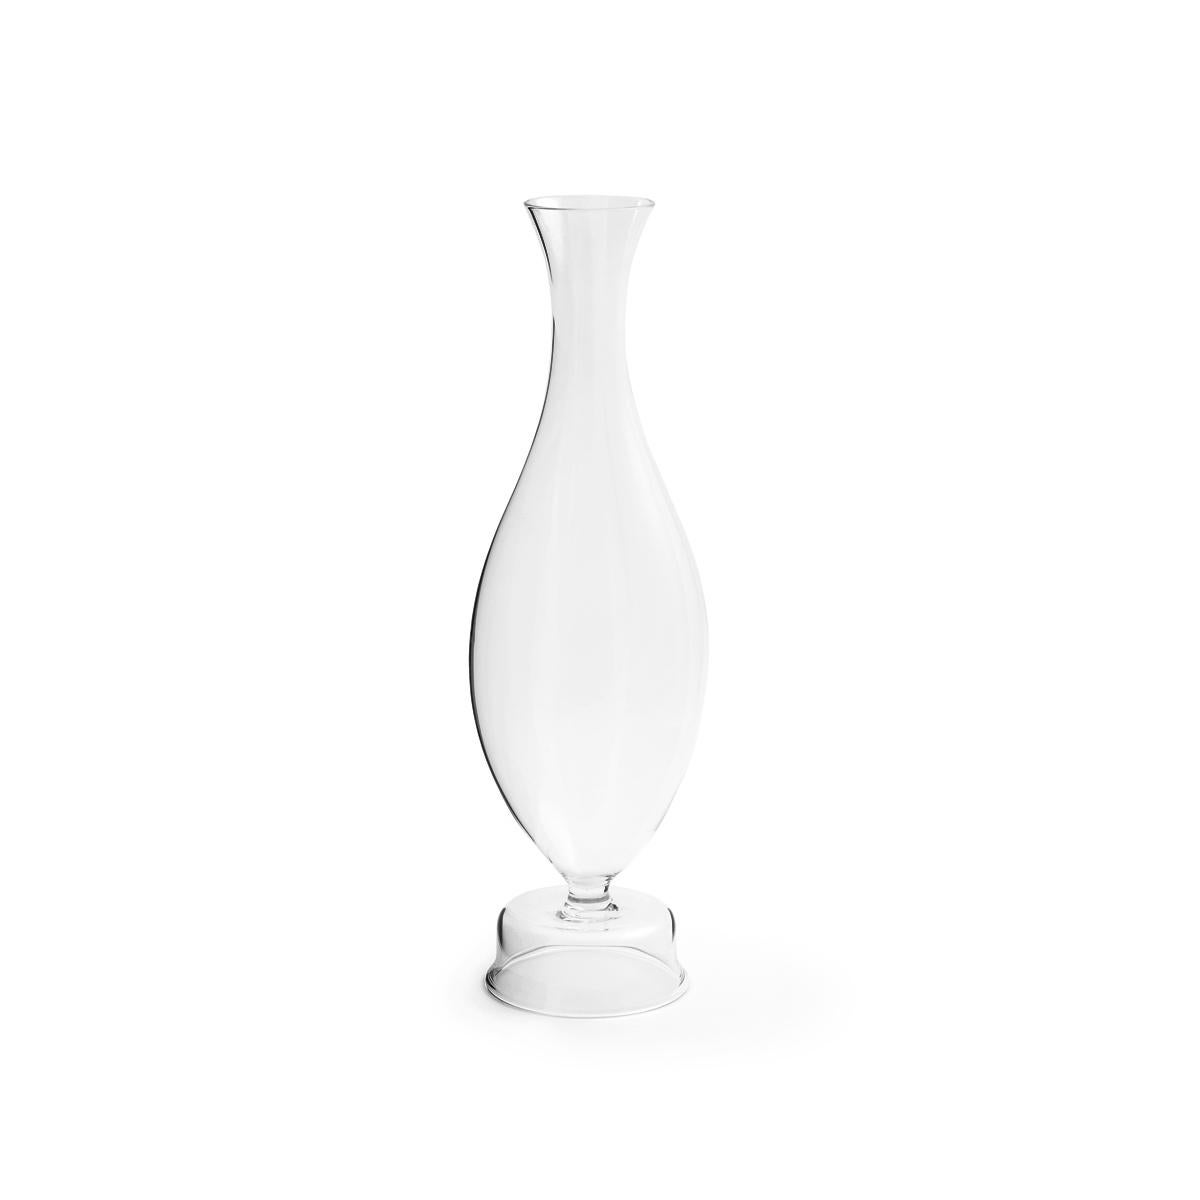 Italian Pims Mouth-Blown Glass Bottle / Vase Designed by Aldo Cibic